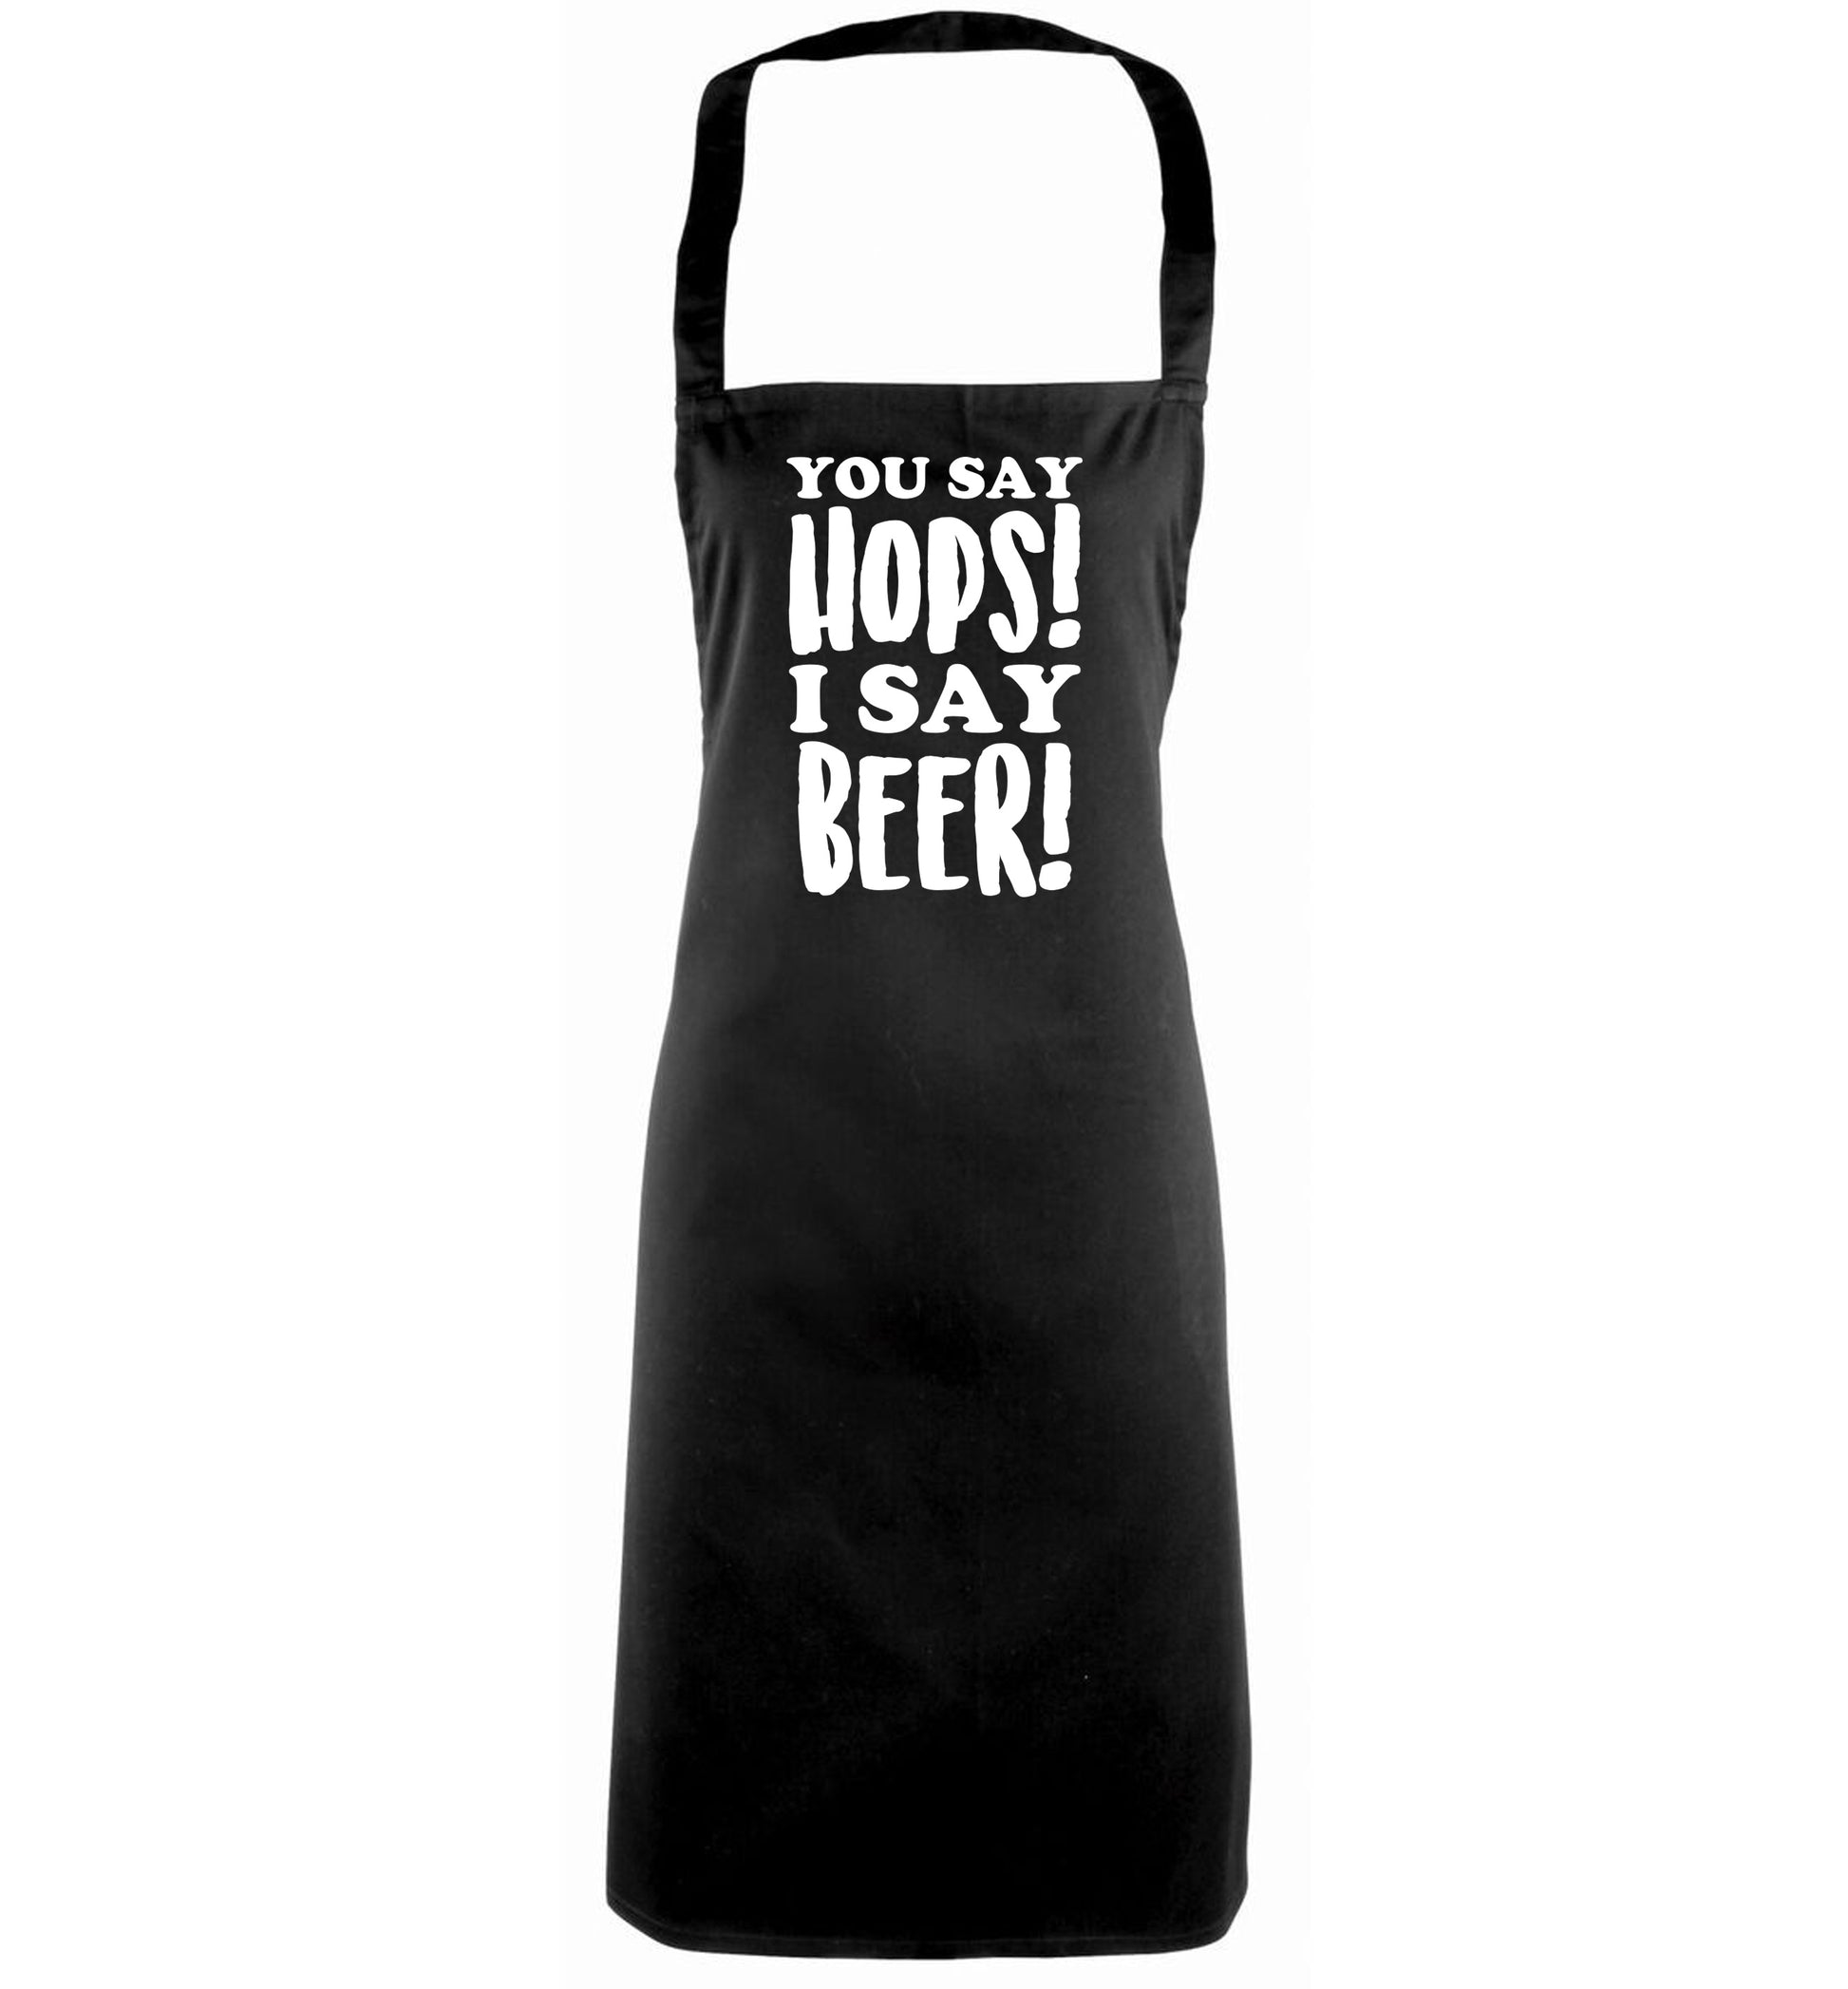 You say hops I say beer! black apron